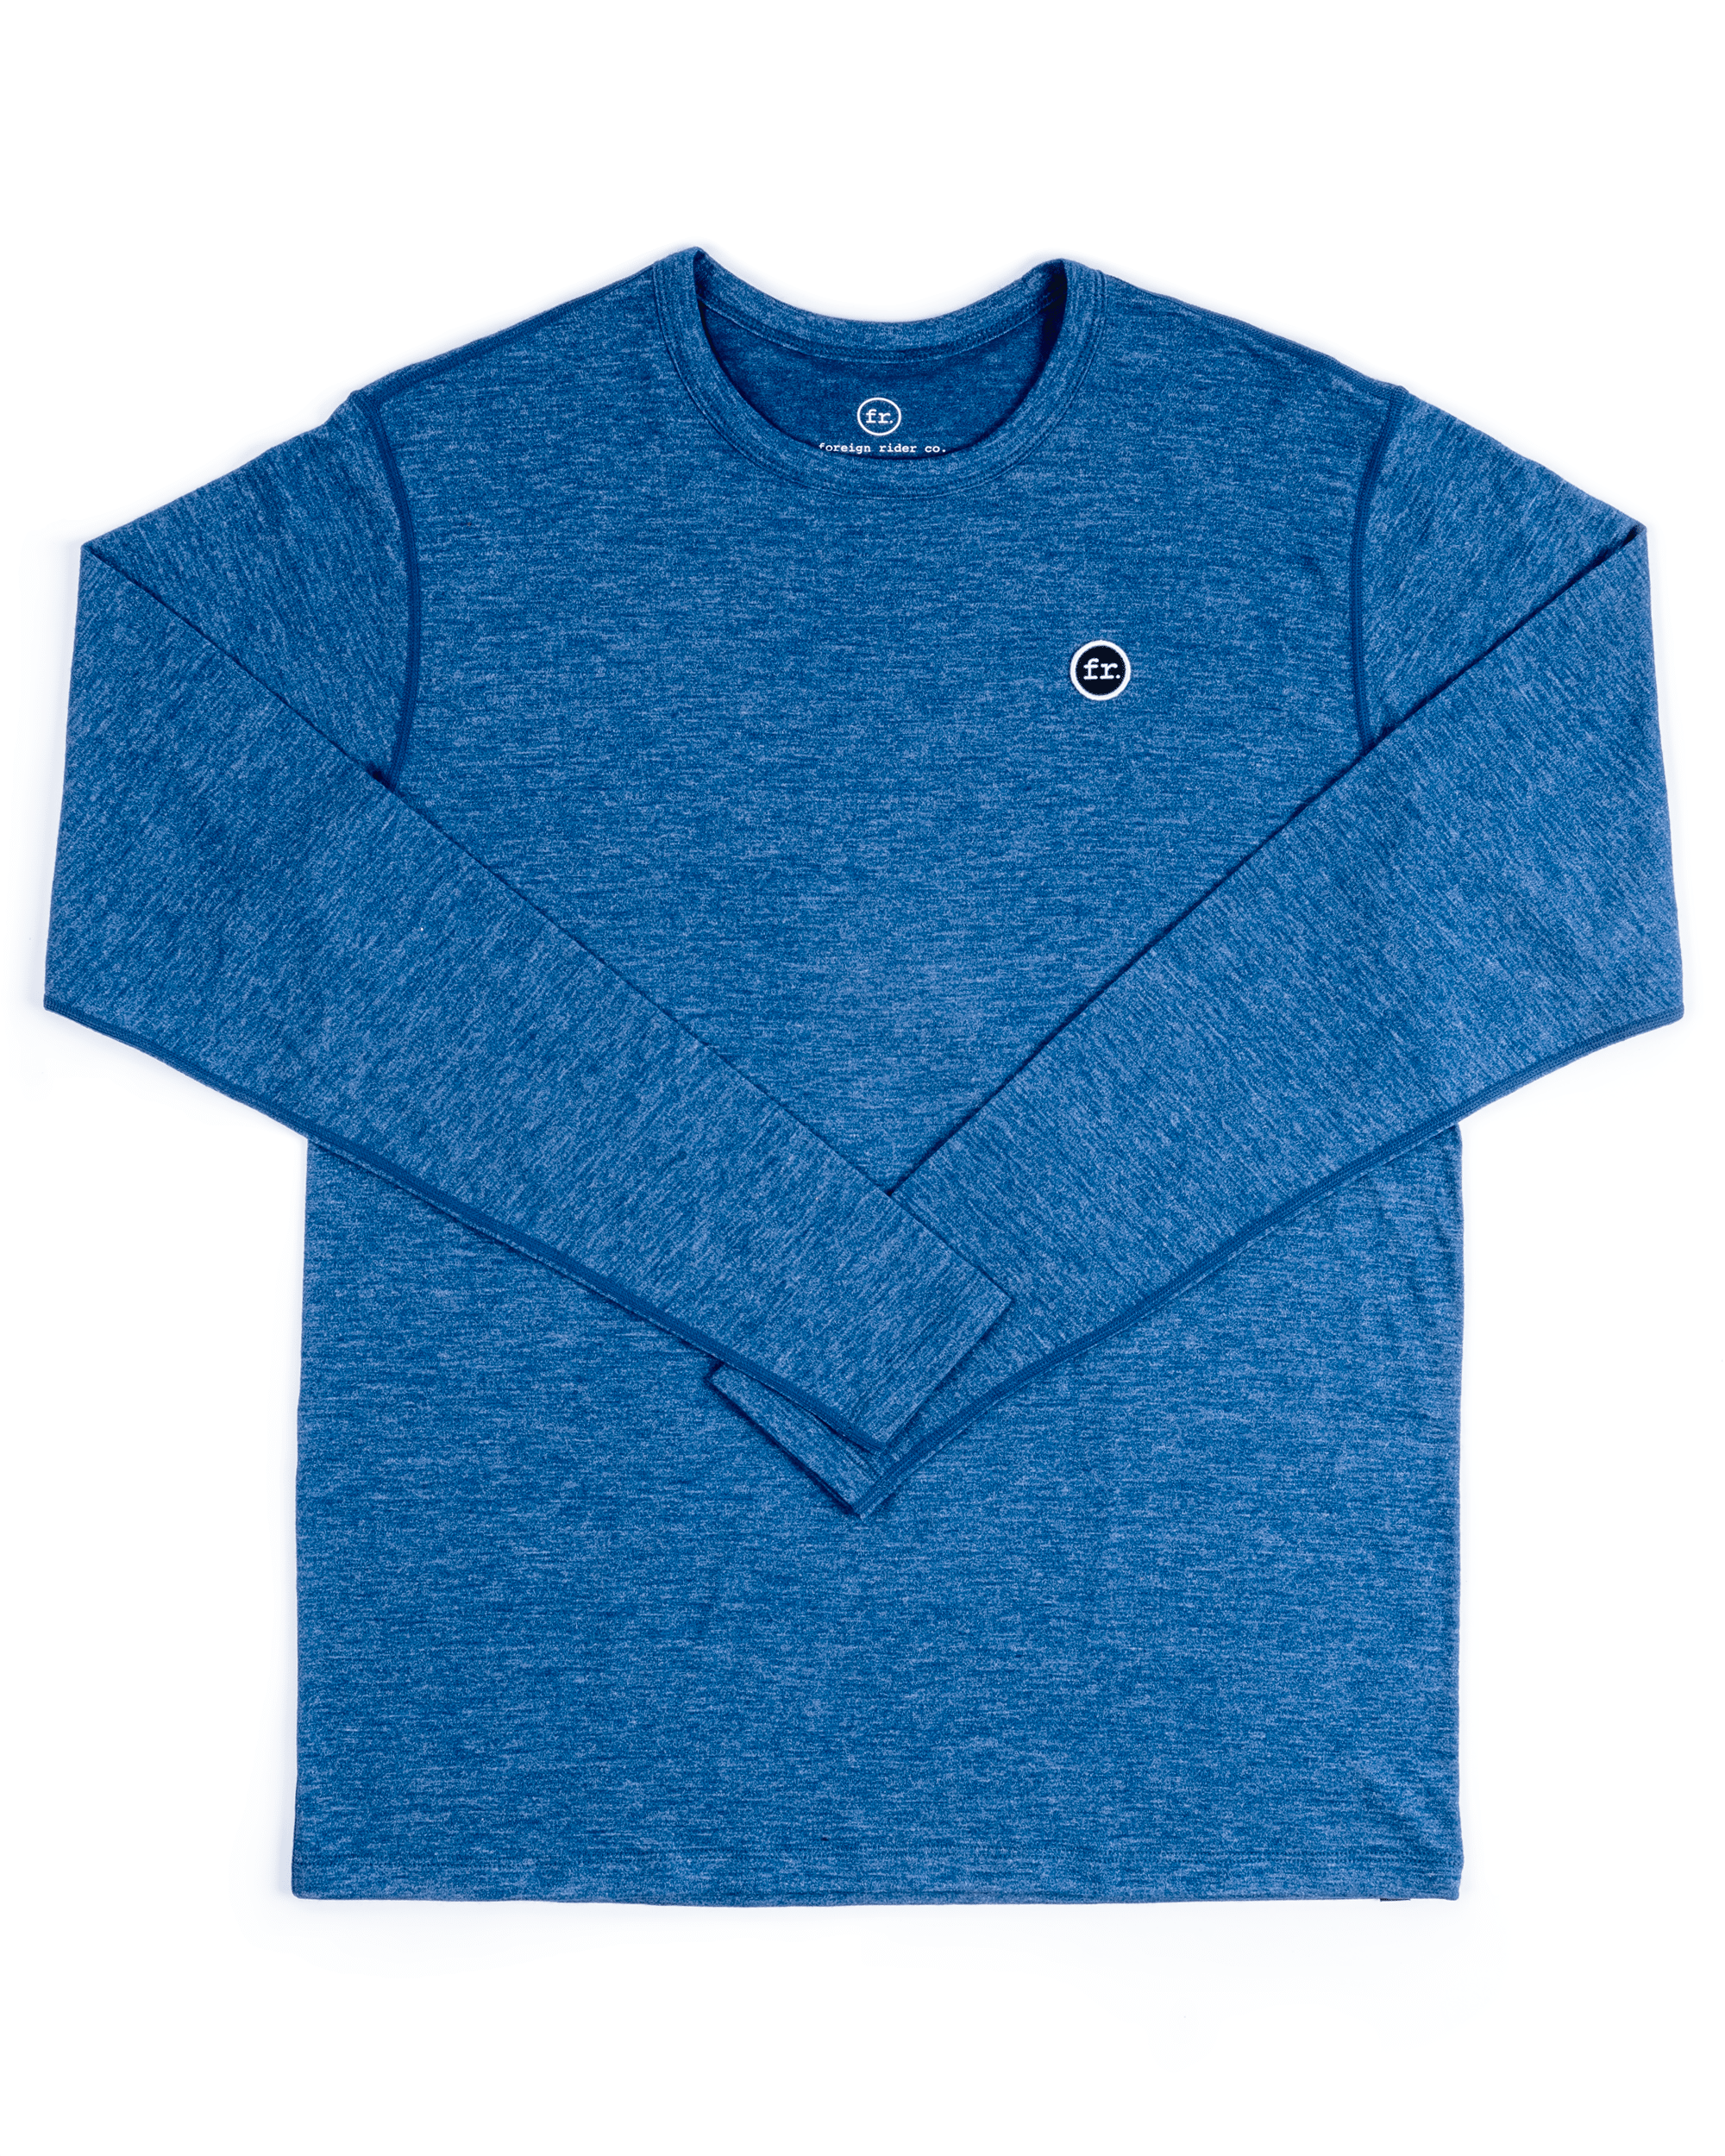 Fdx Monarch Women's Base Layer Compression Shirt Blue